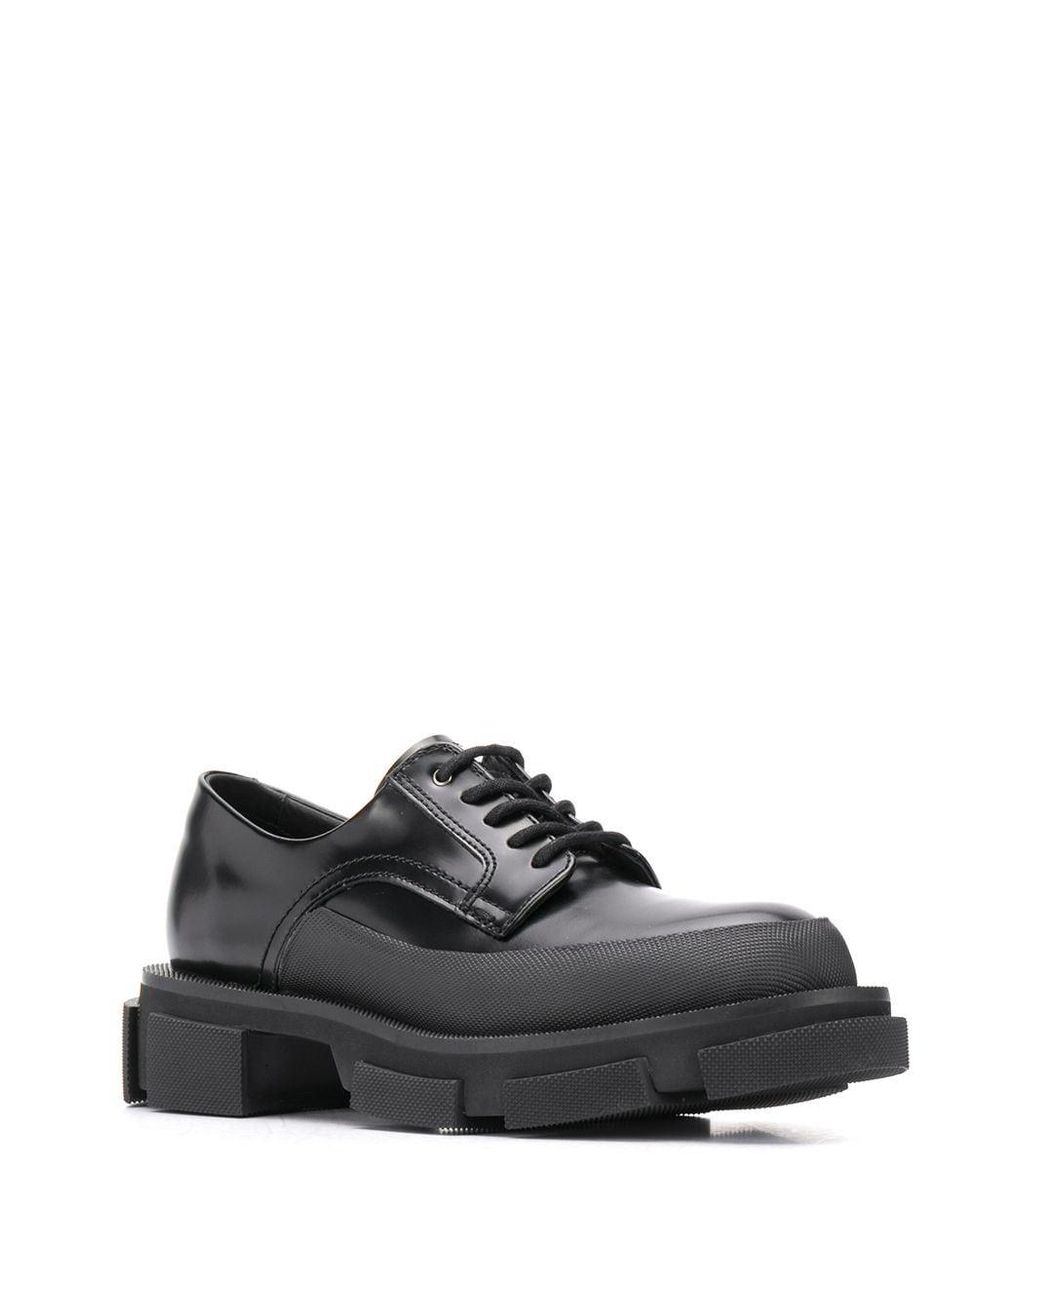 BOTH Paris Gao Derby Shoes in Black | Lyst Canada